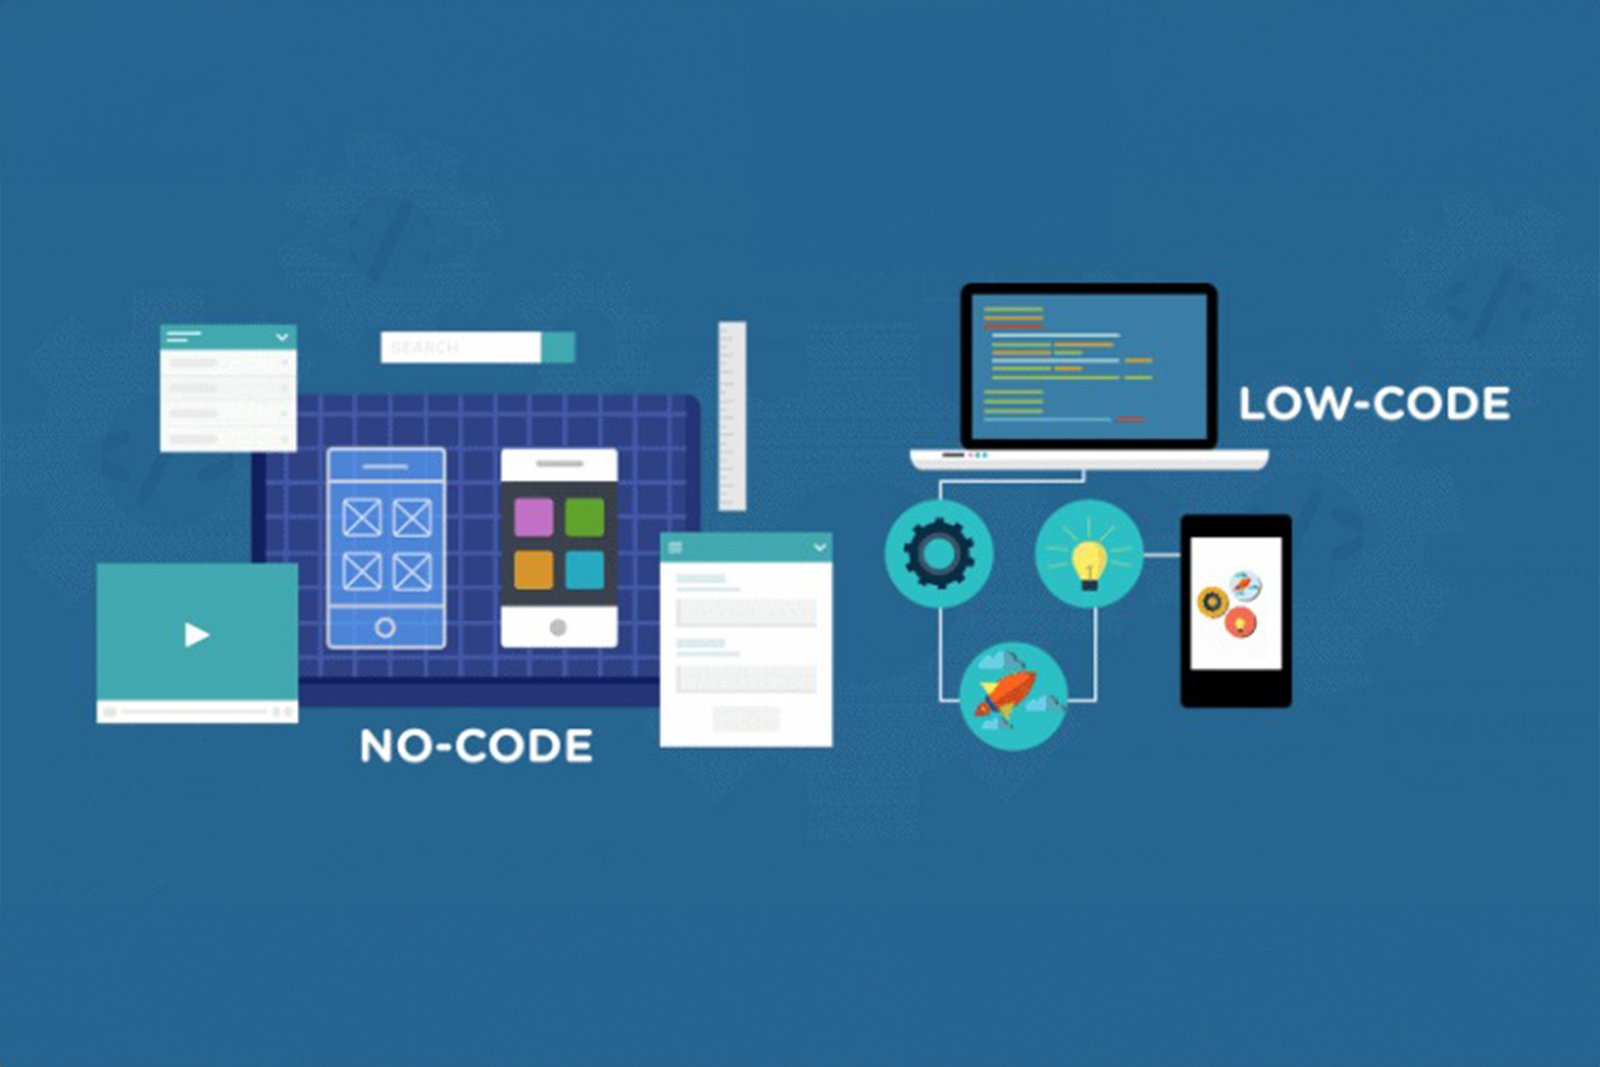 ow-Code and No-Code Platforms